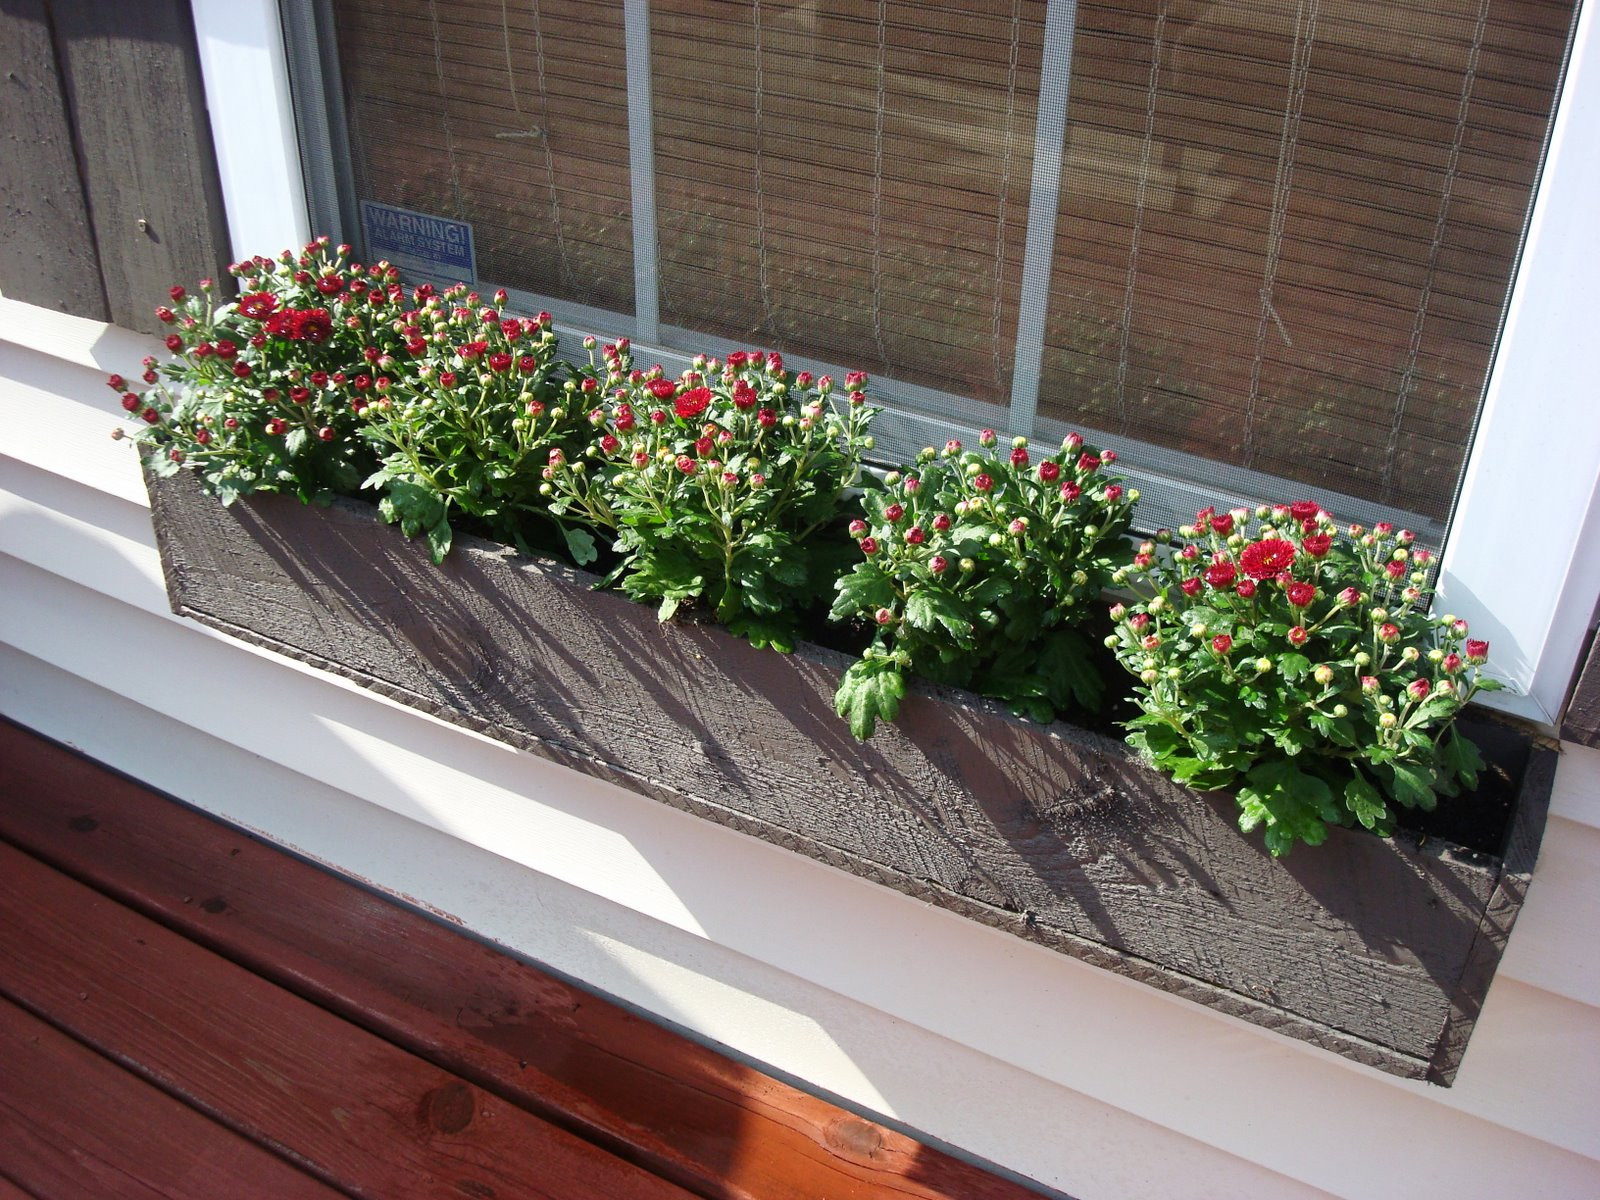 Best ideas about DIY Window Boxes Planters
. Save or Pin 12 Gorgeous DIY Window Box Planters Now.